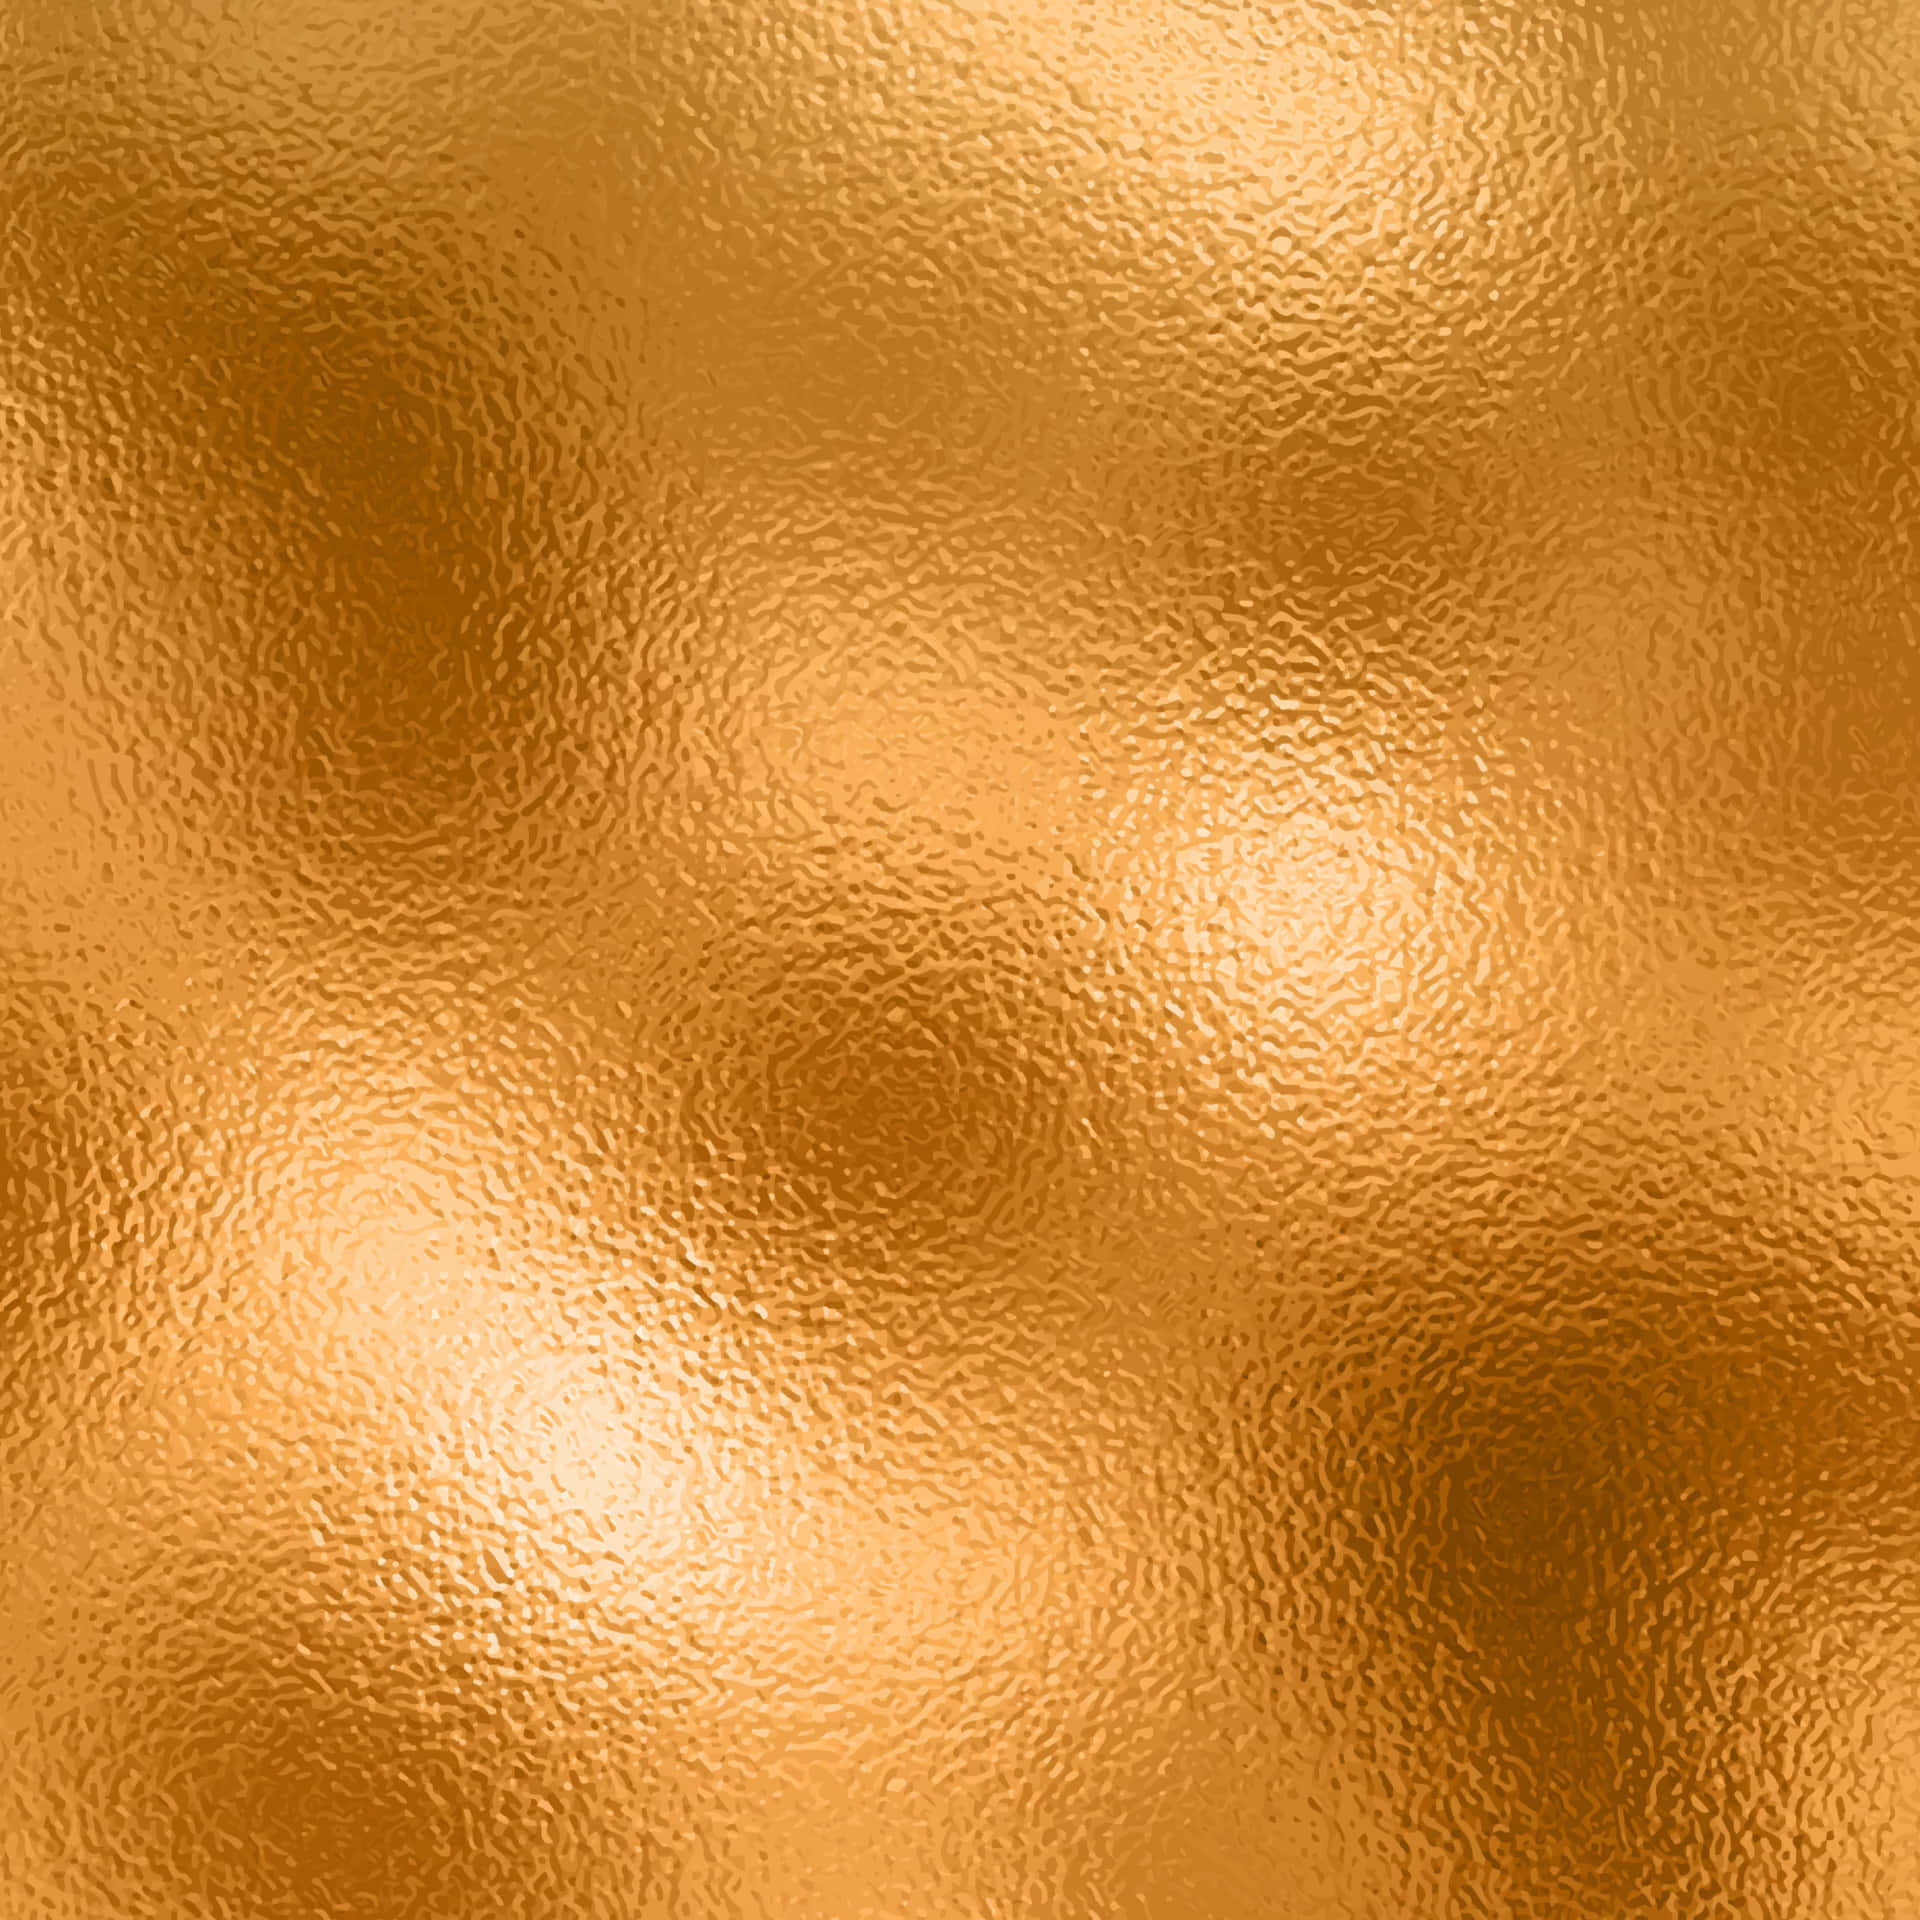 Elegant Gold Foil Texture Background